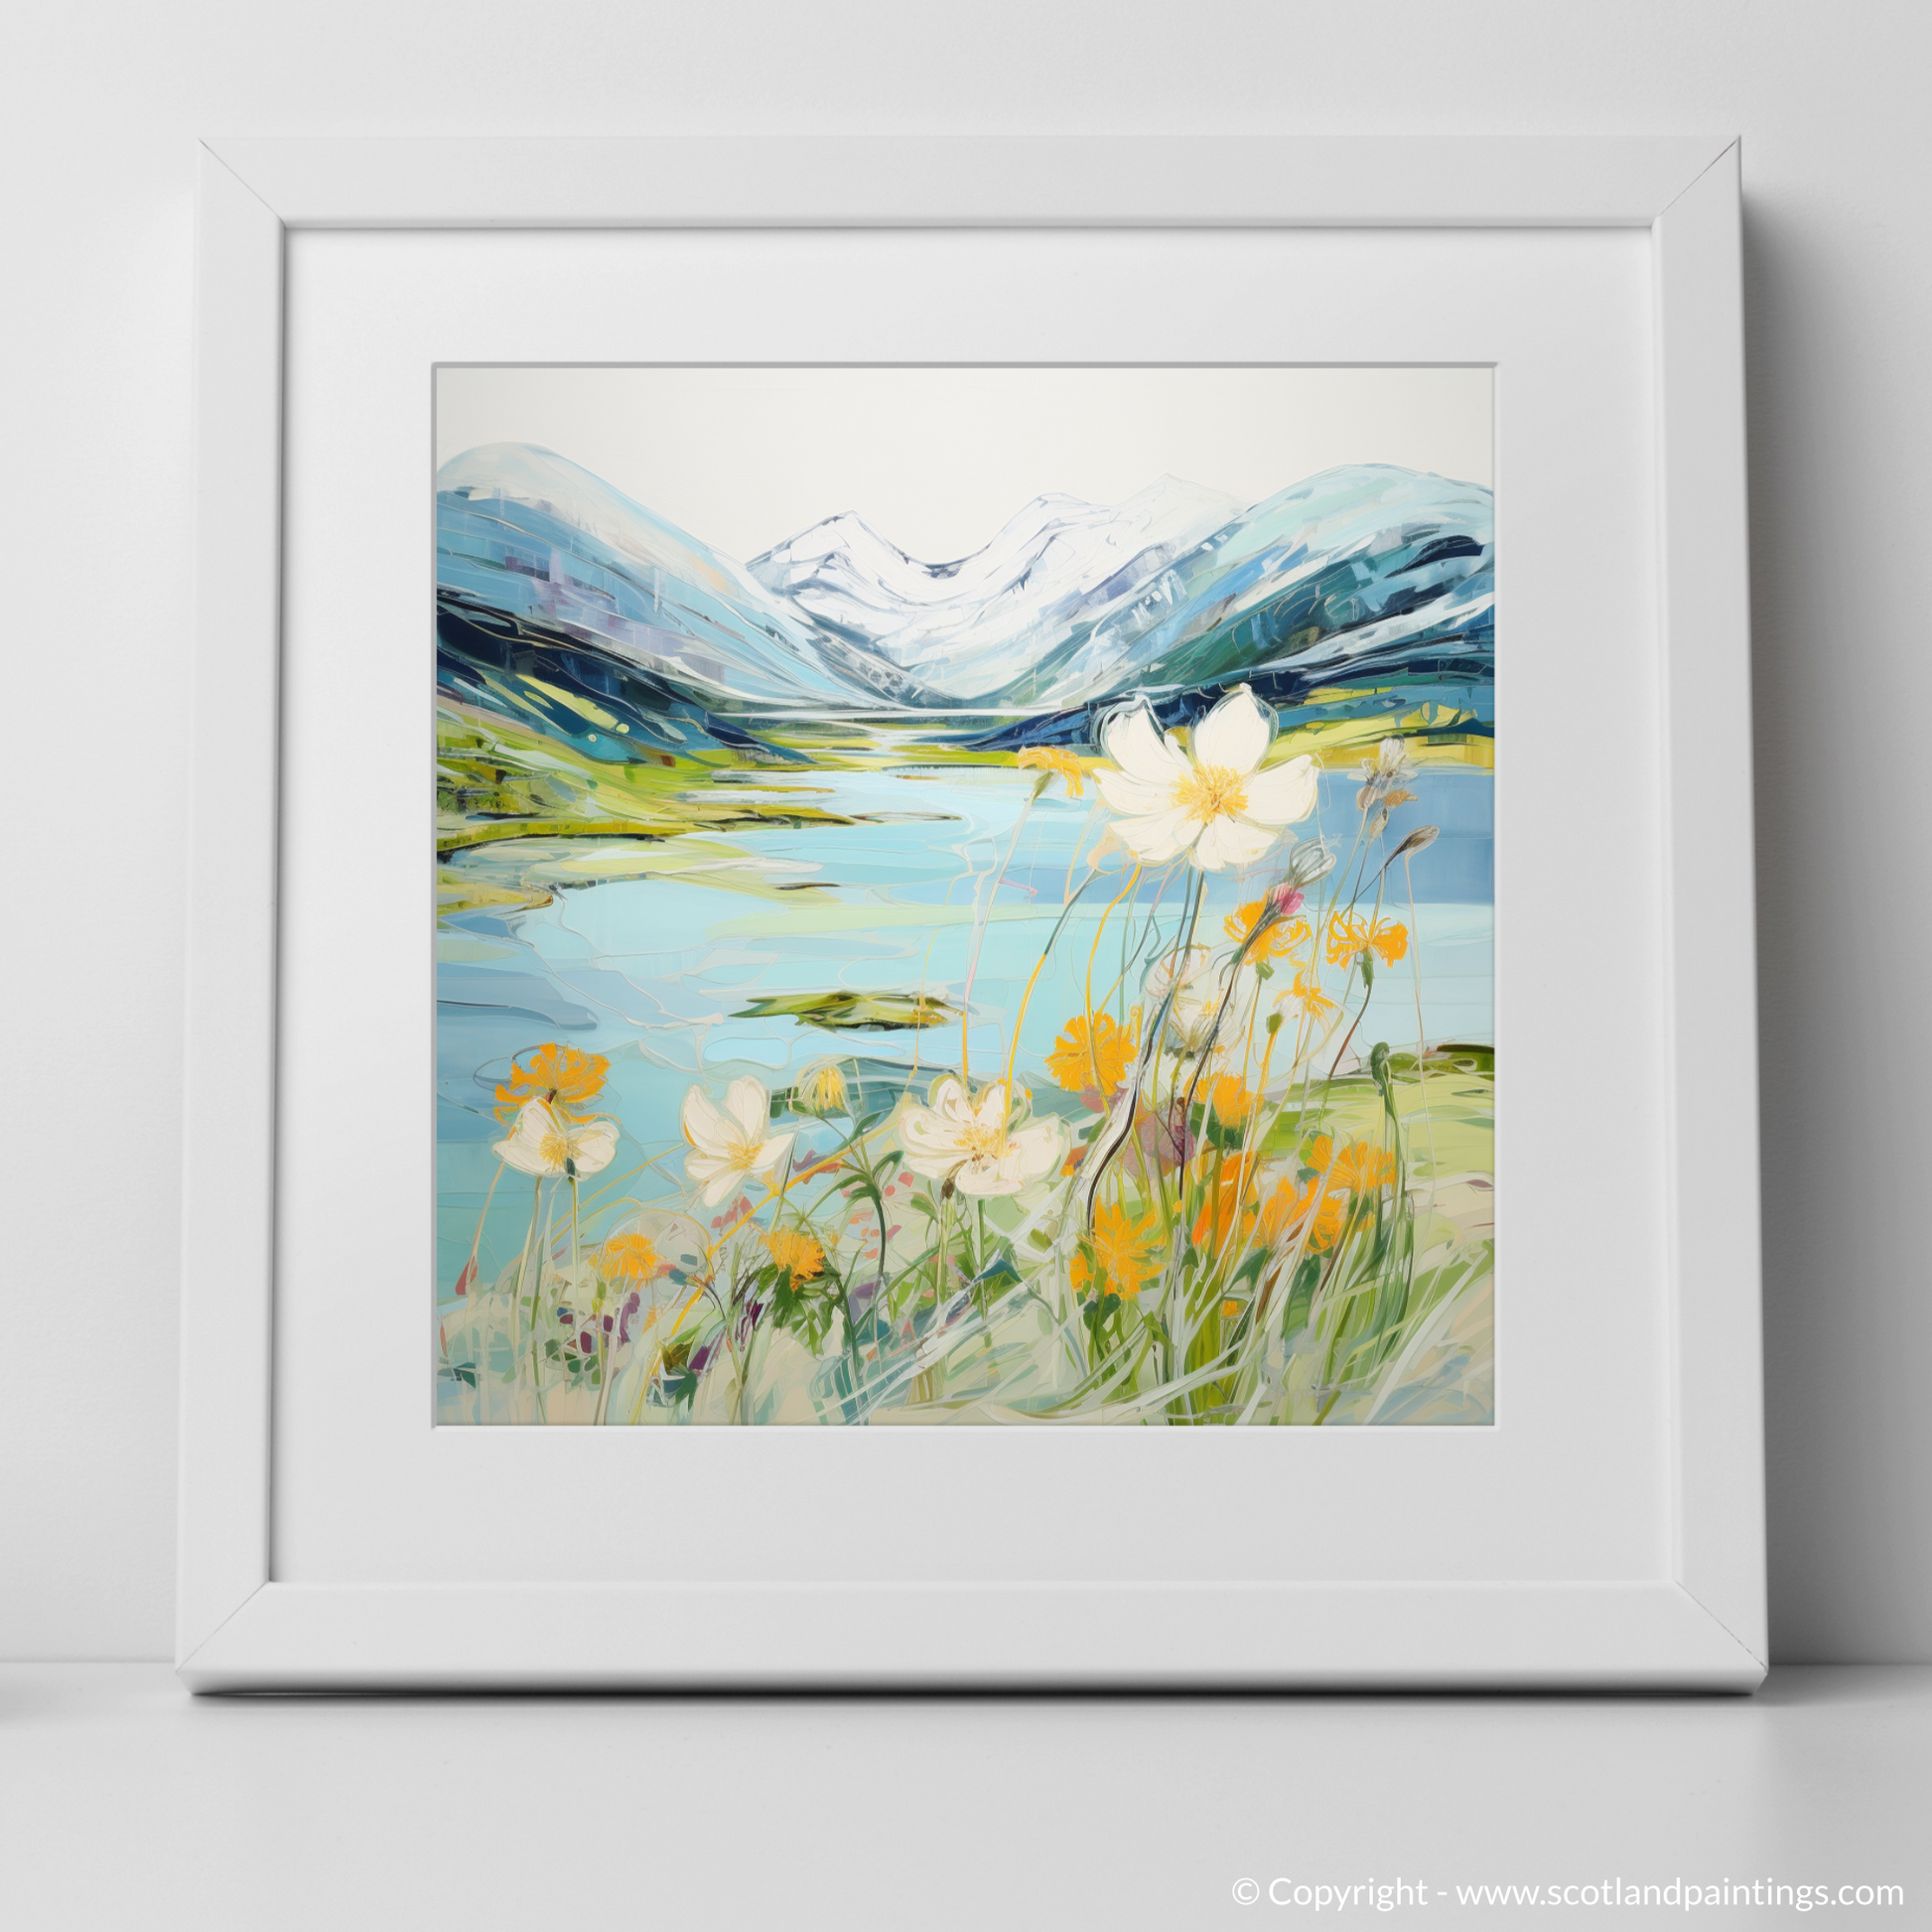 Art Print of Mountain avens near serene lochan in Glencoe with a white frame